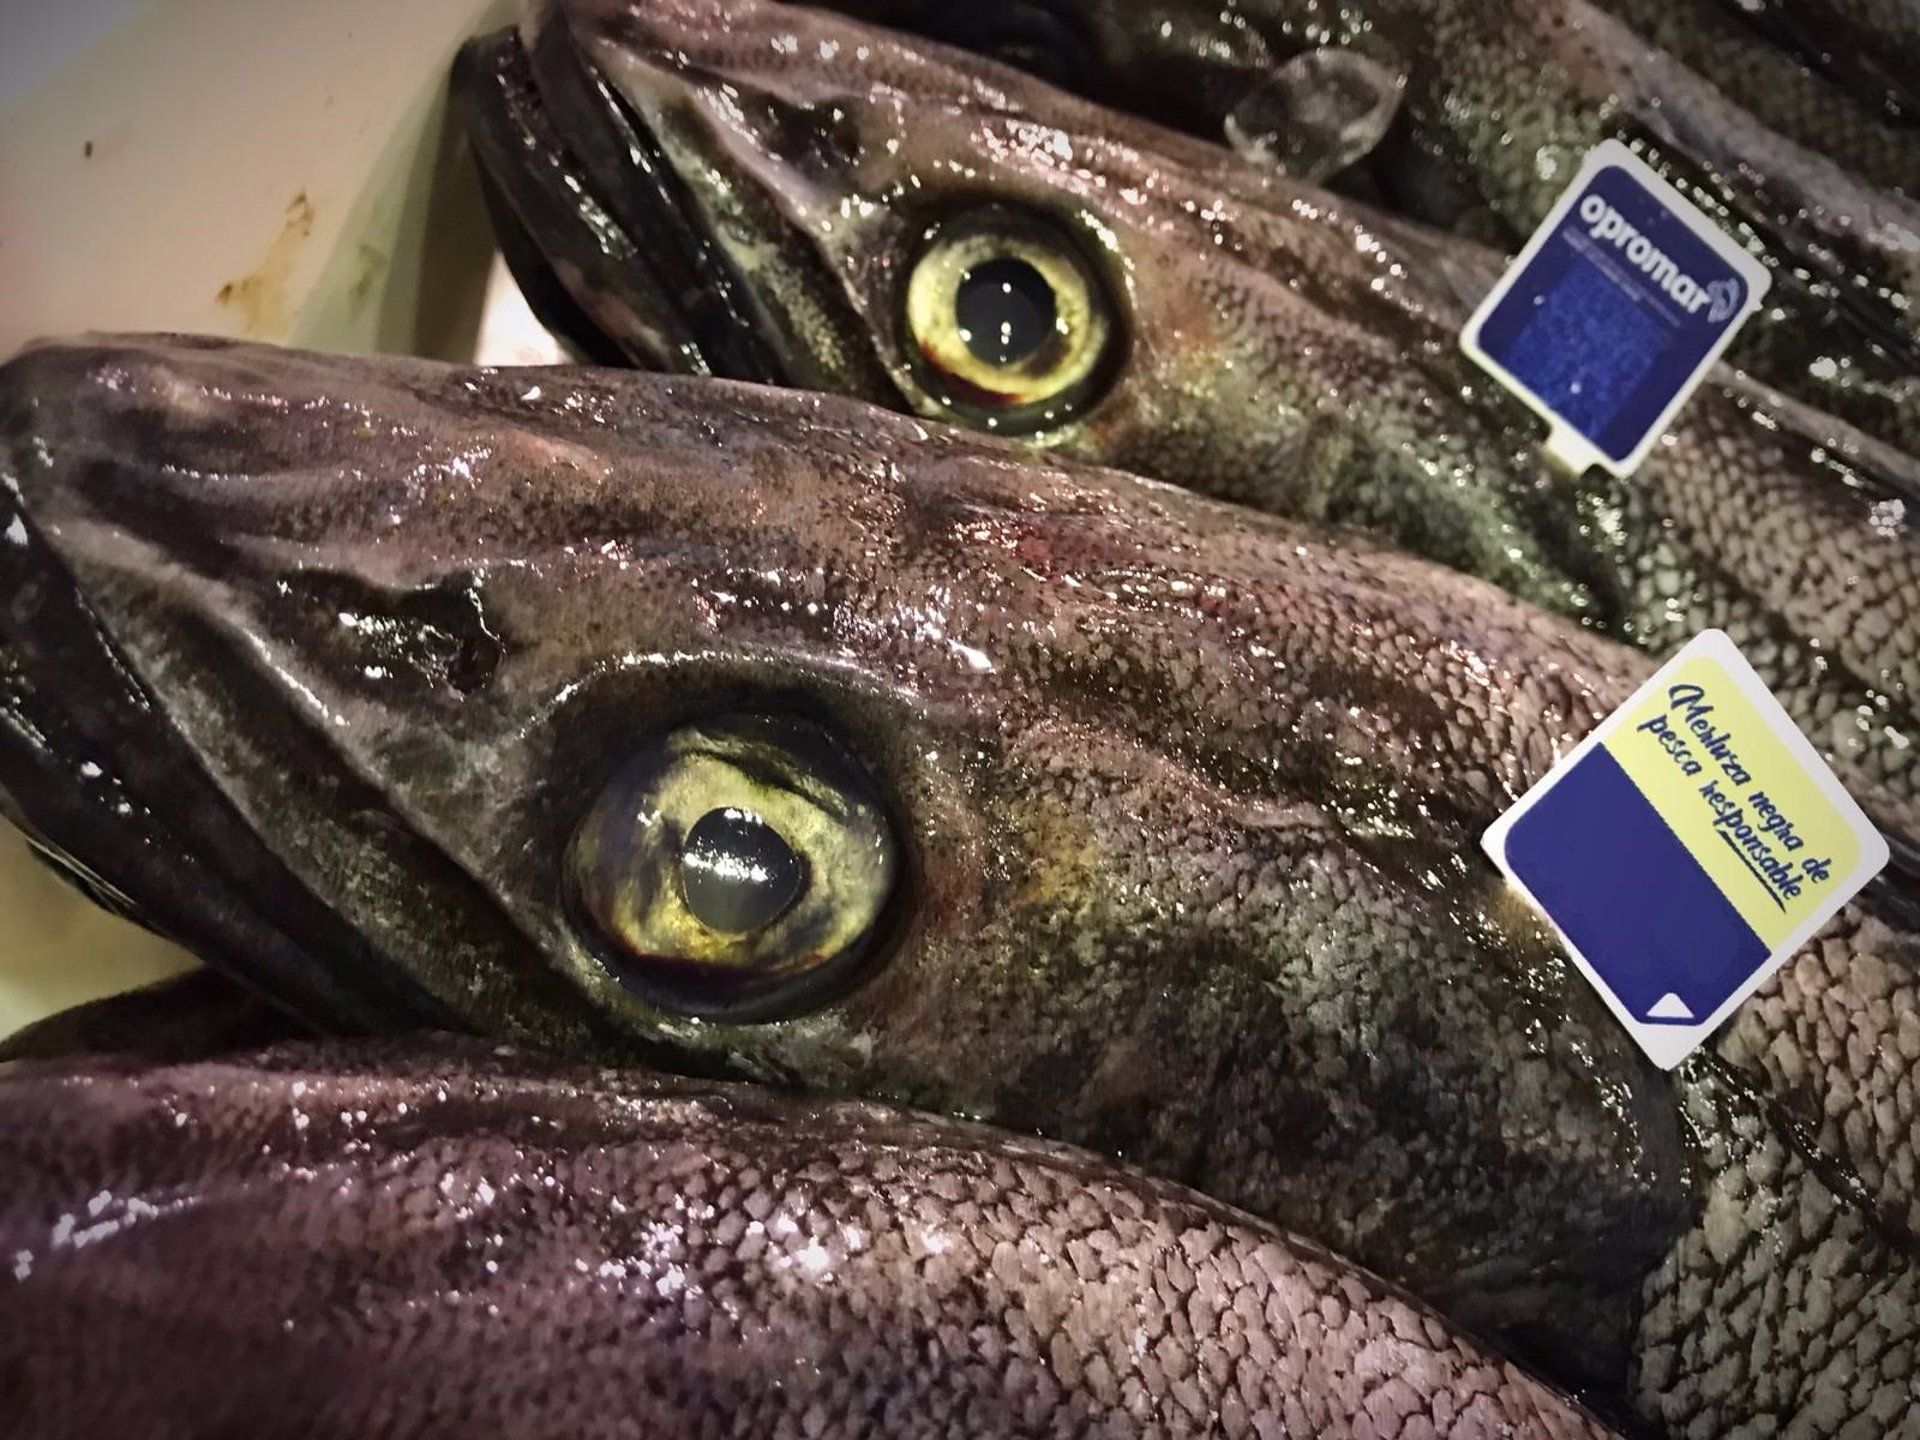 Merluza Negra de Pesca Responsable que se podrá degustar en el mercado de Cádiz.